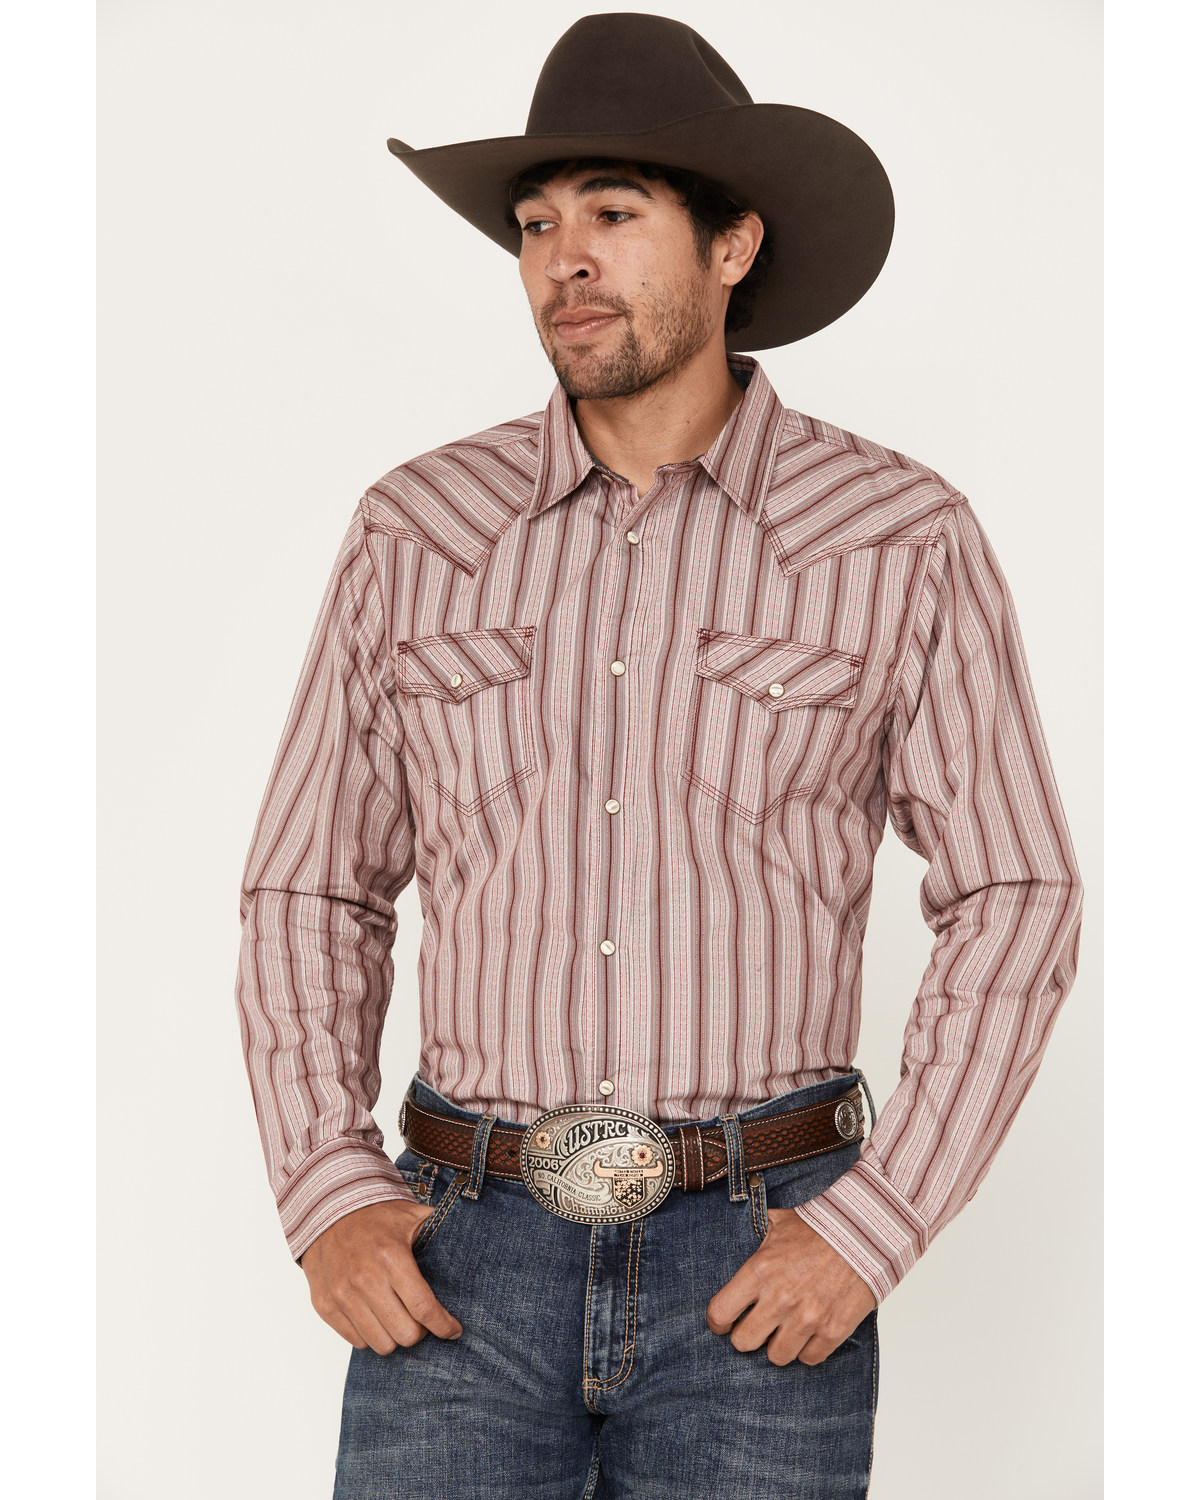 Moonshine Spirit Men's Red Canyon Striped Short Sleeve Pearl Snap Western Shirt